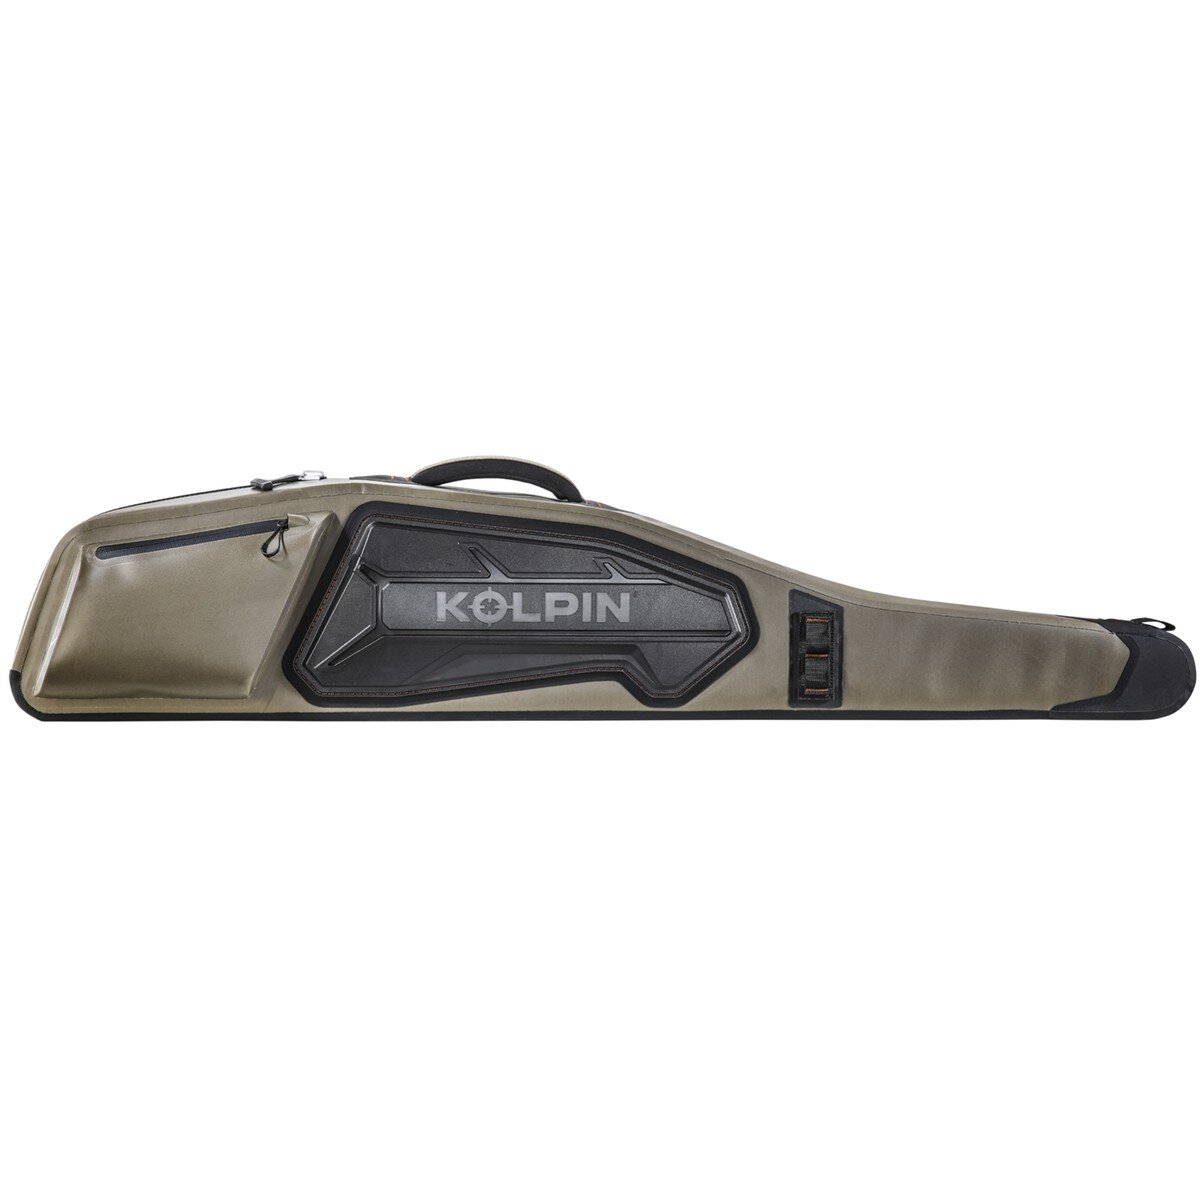 Kolpin dry armor rifle case_front.jpg